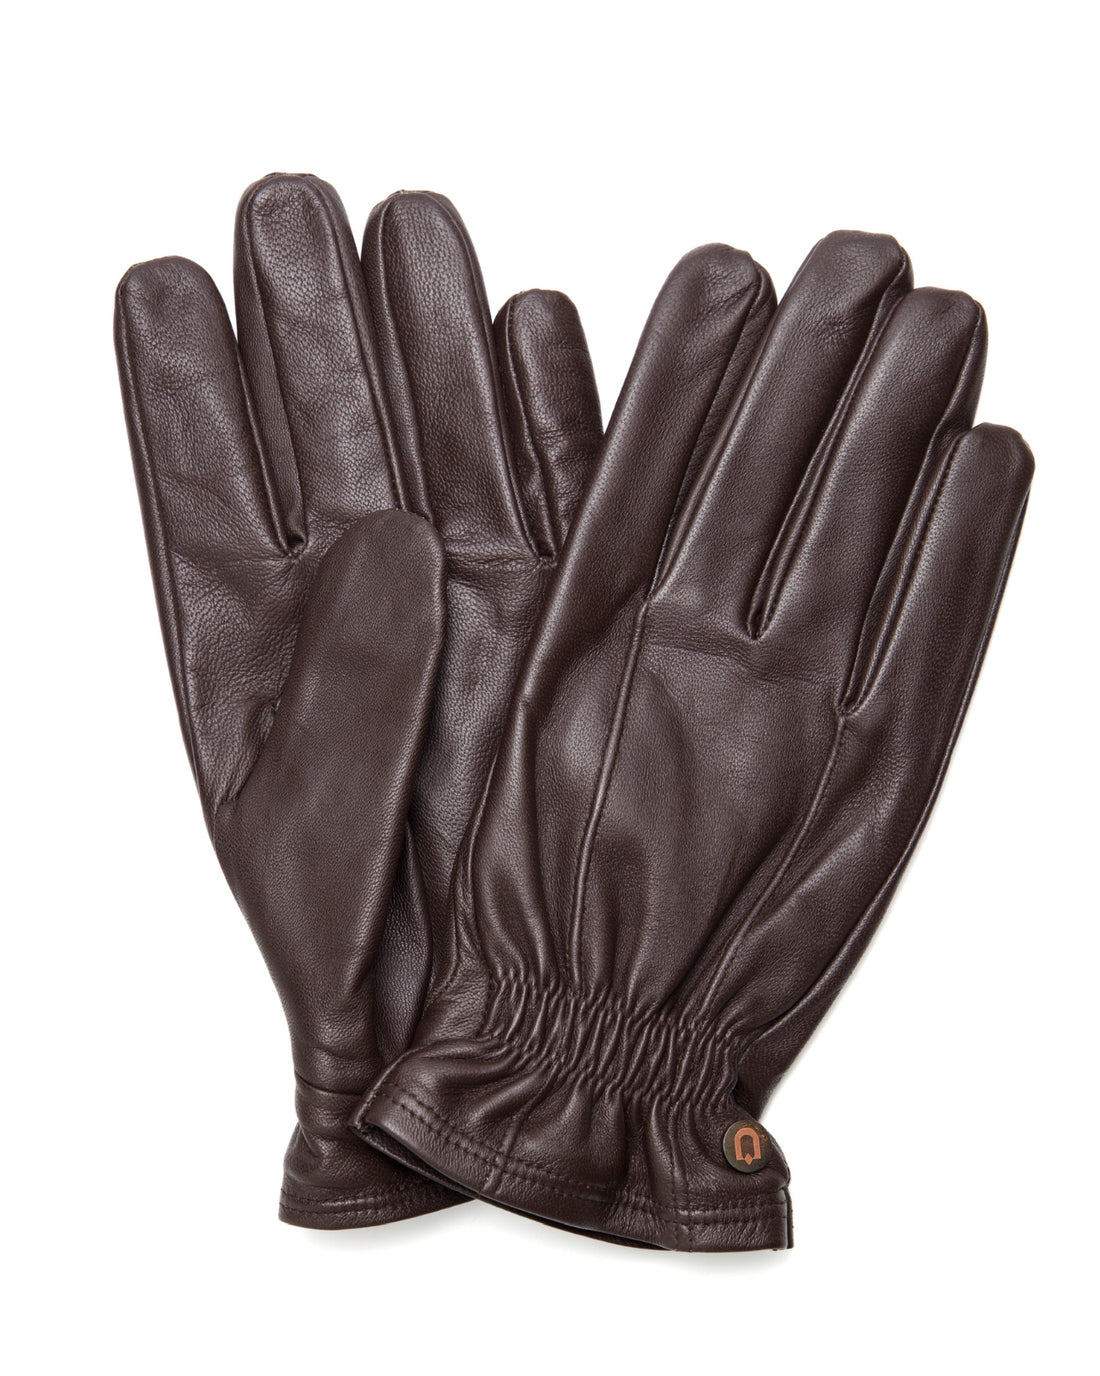 Lambskin Leather Gloves - Brown - Gloves by Urbbana